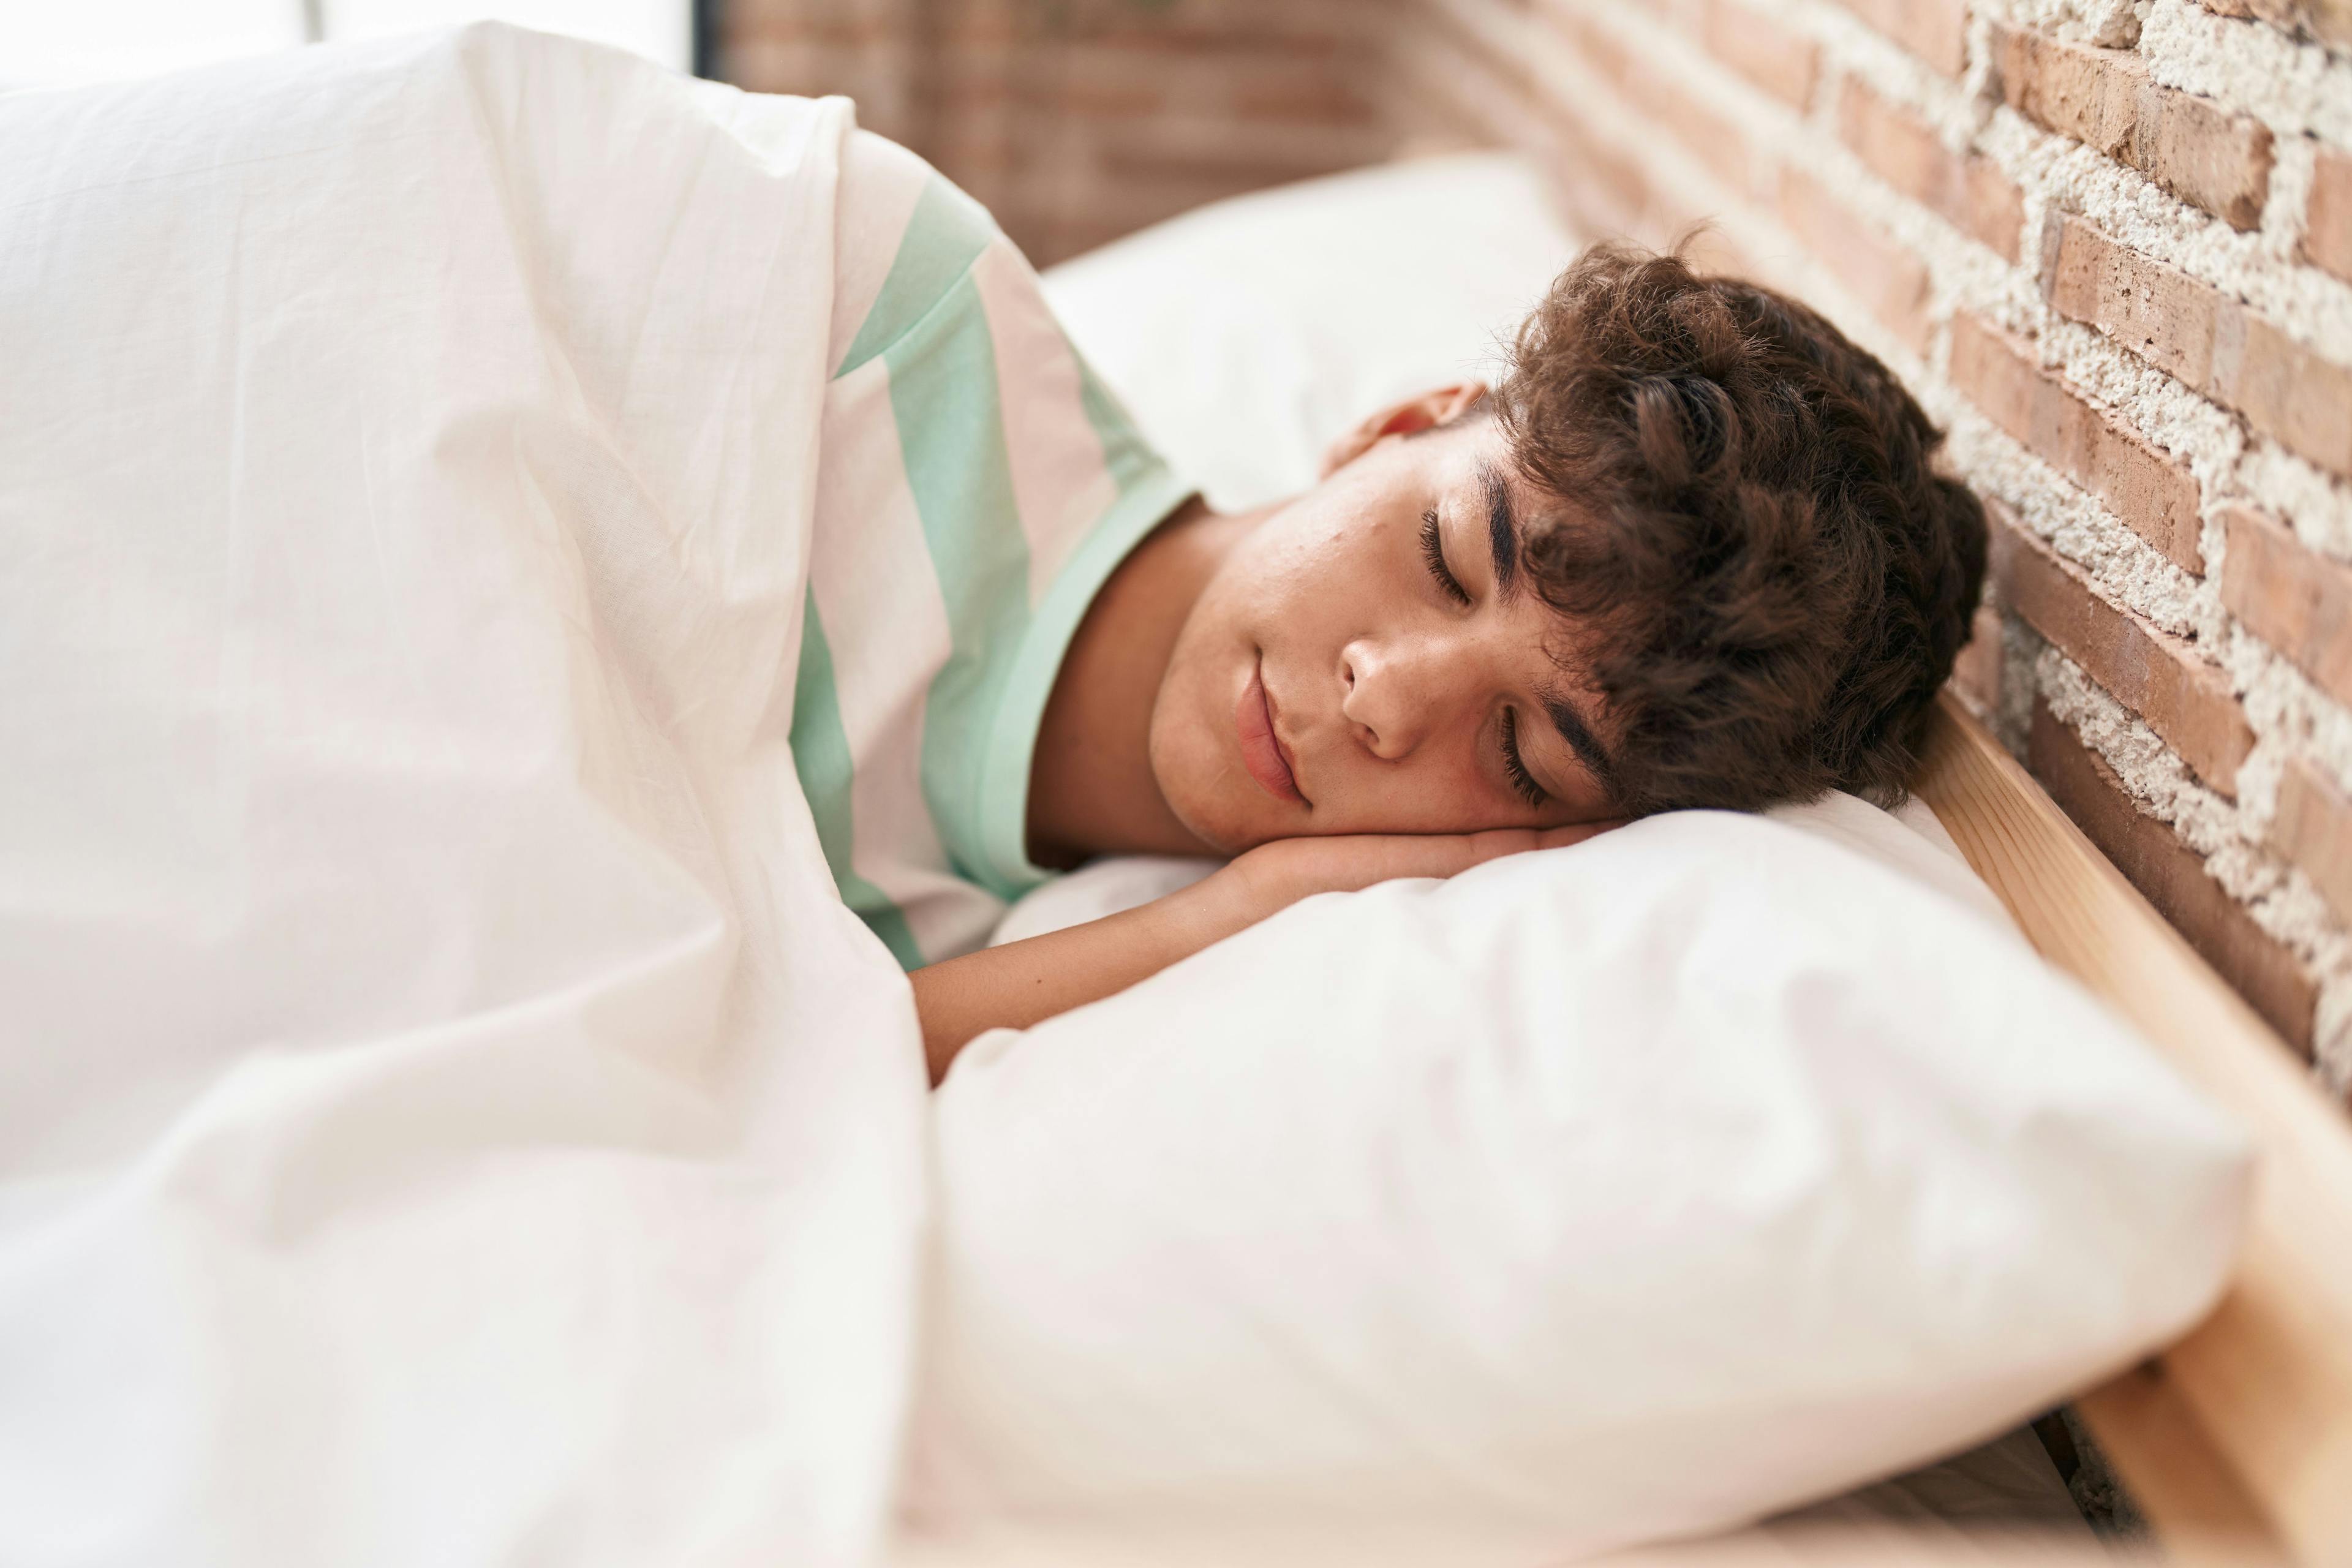 Teenager sleeping | Image credit: Krakenimages.com - stock.adobe.com